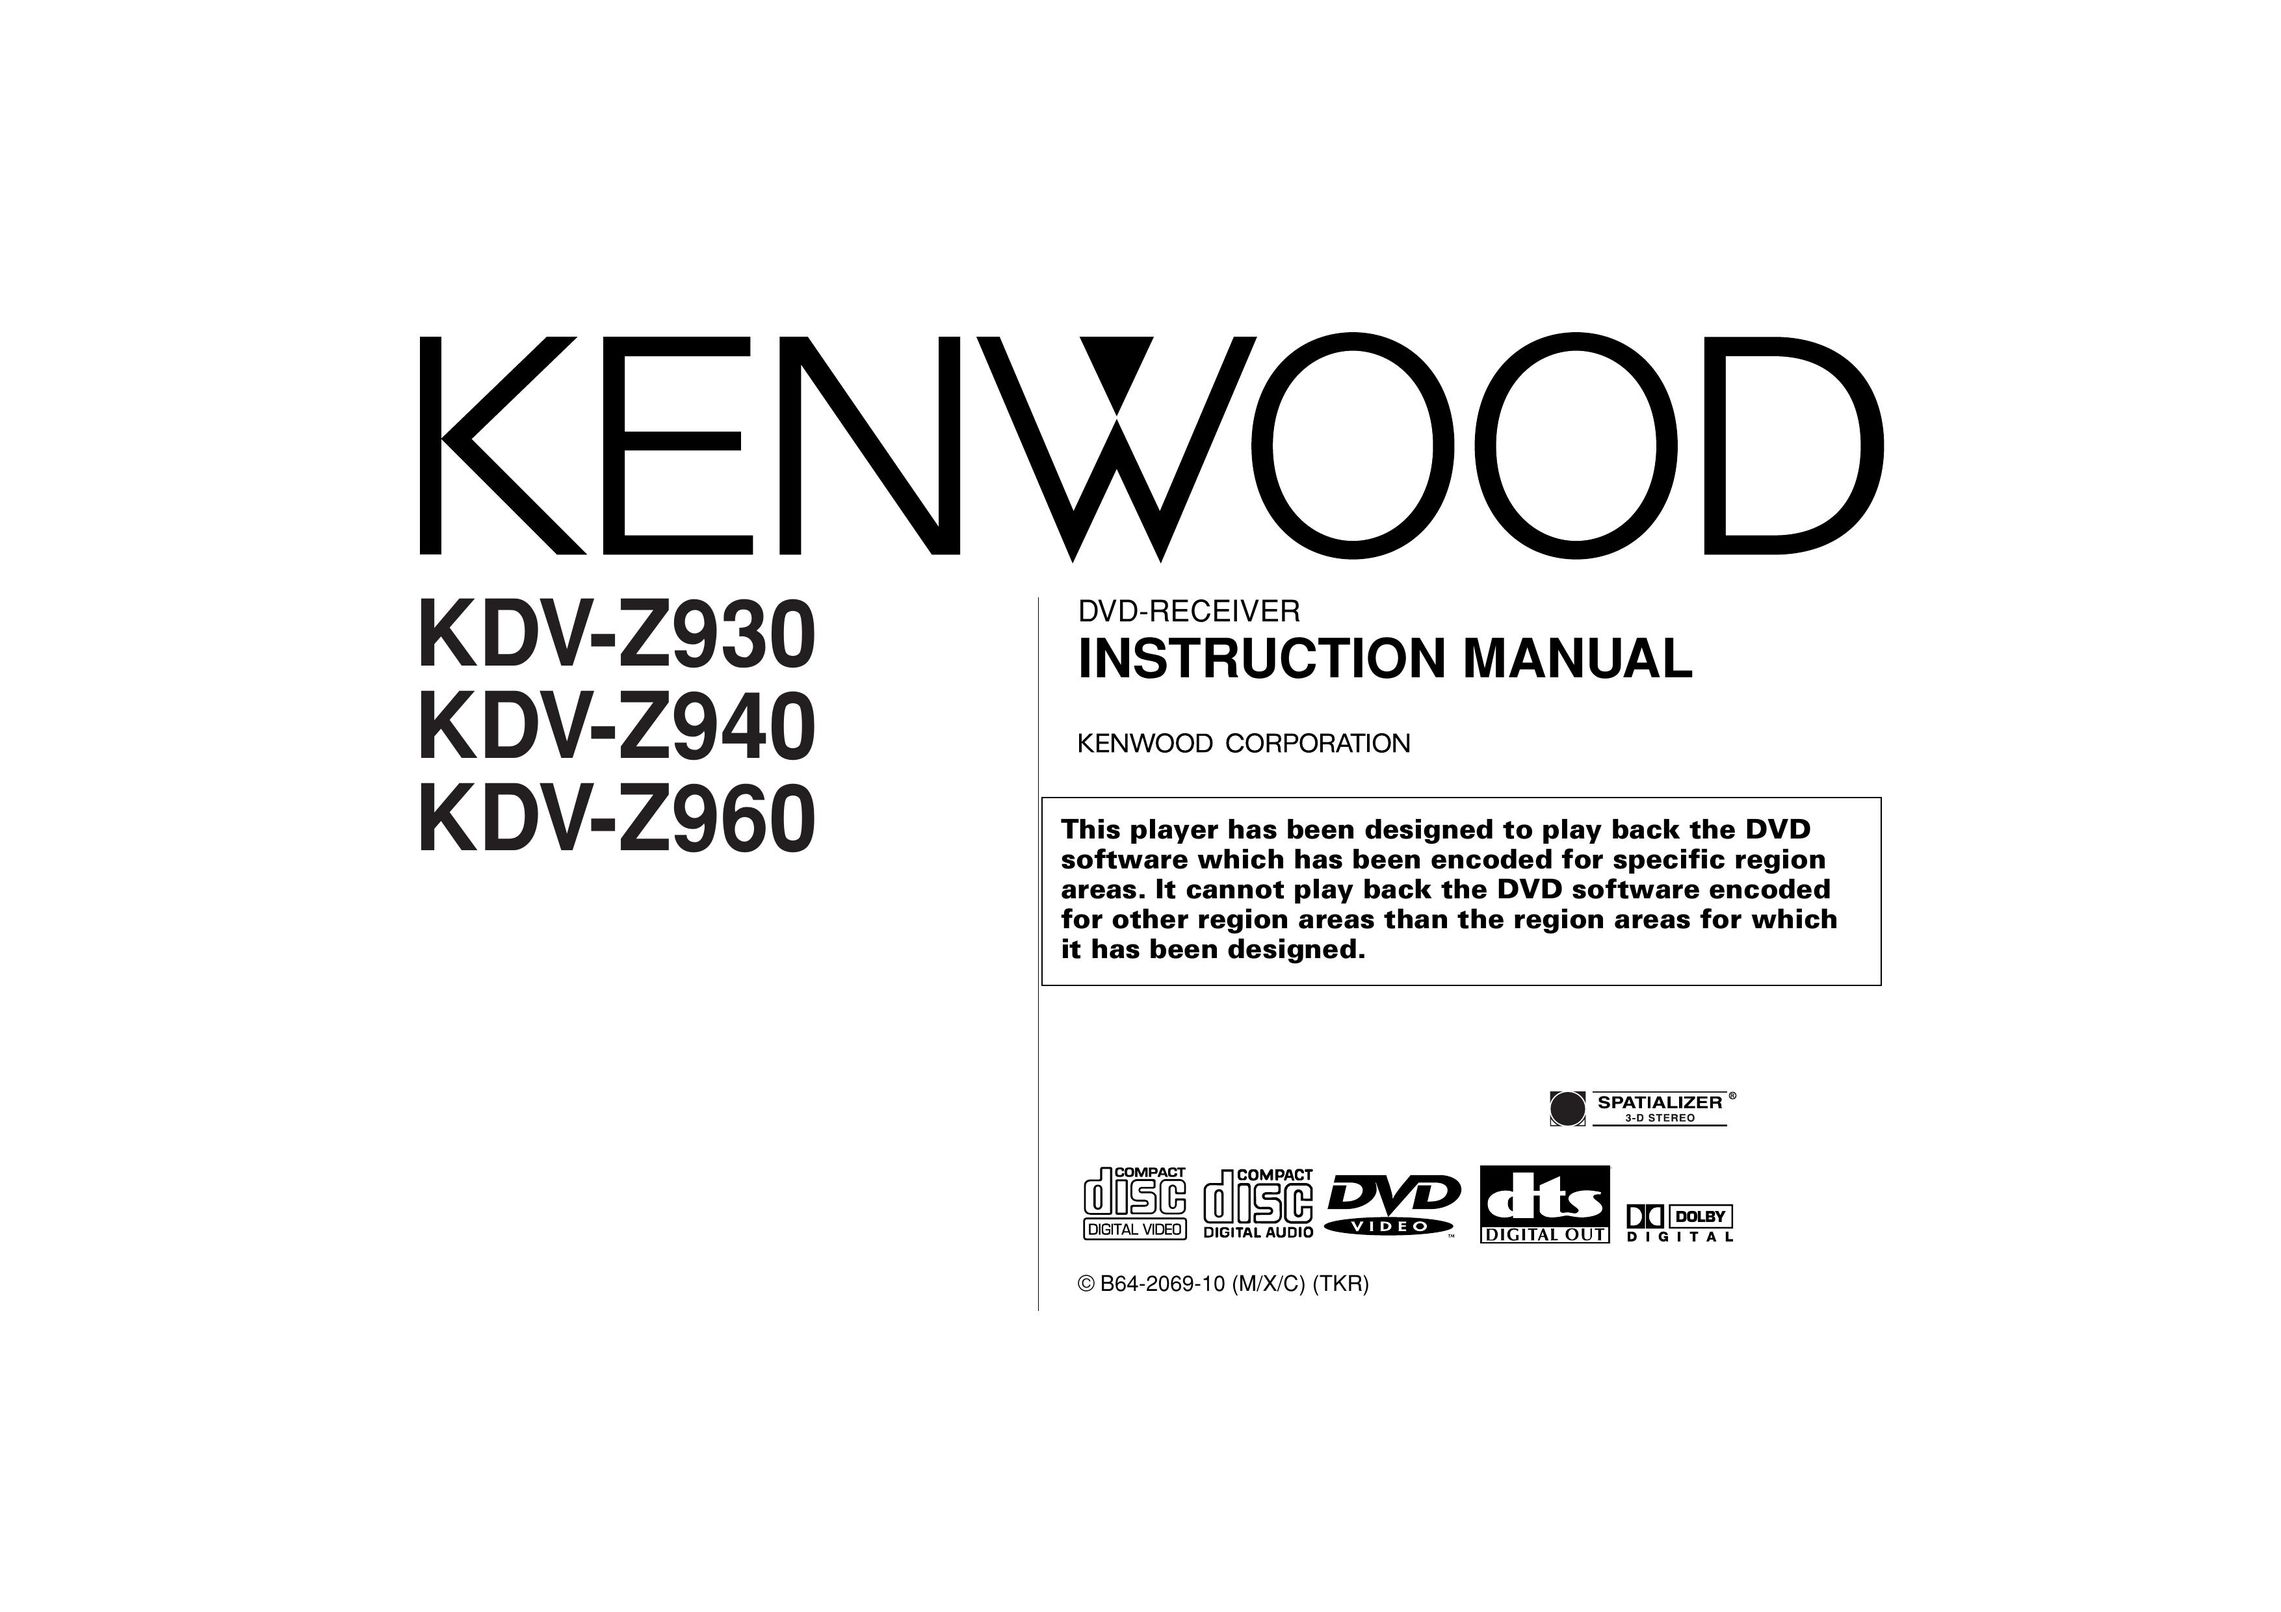 Kenwood KDV-Z940 DVD Player User Manual